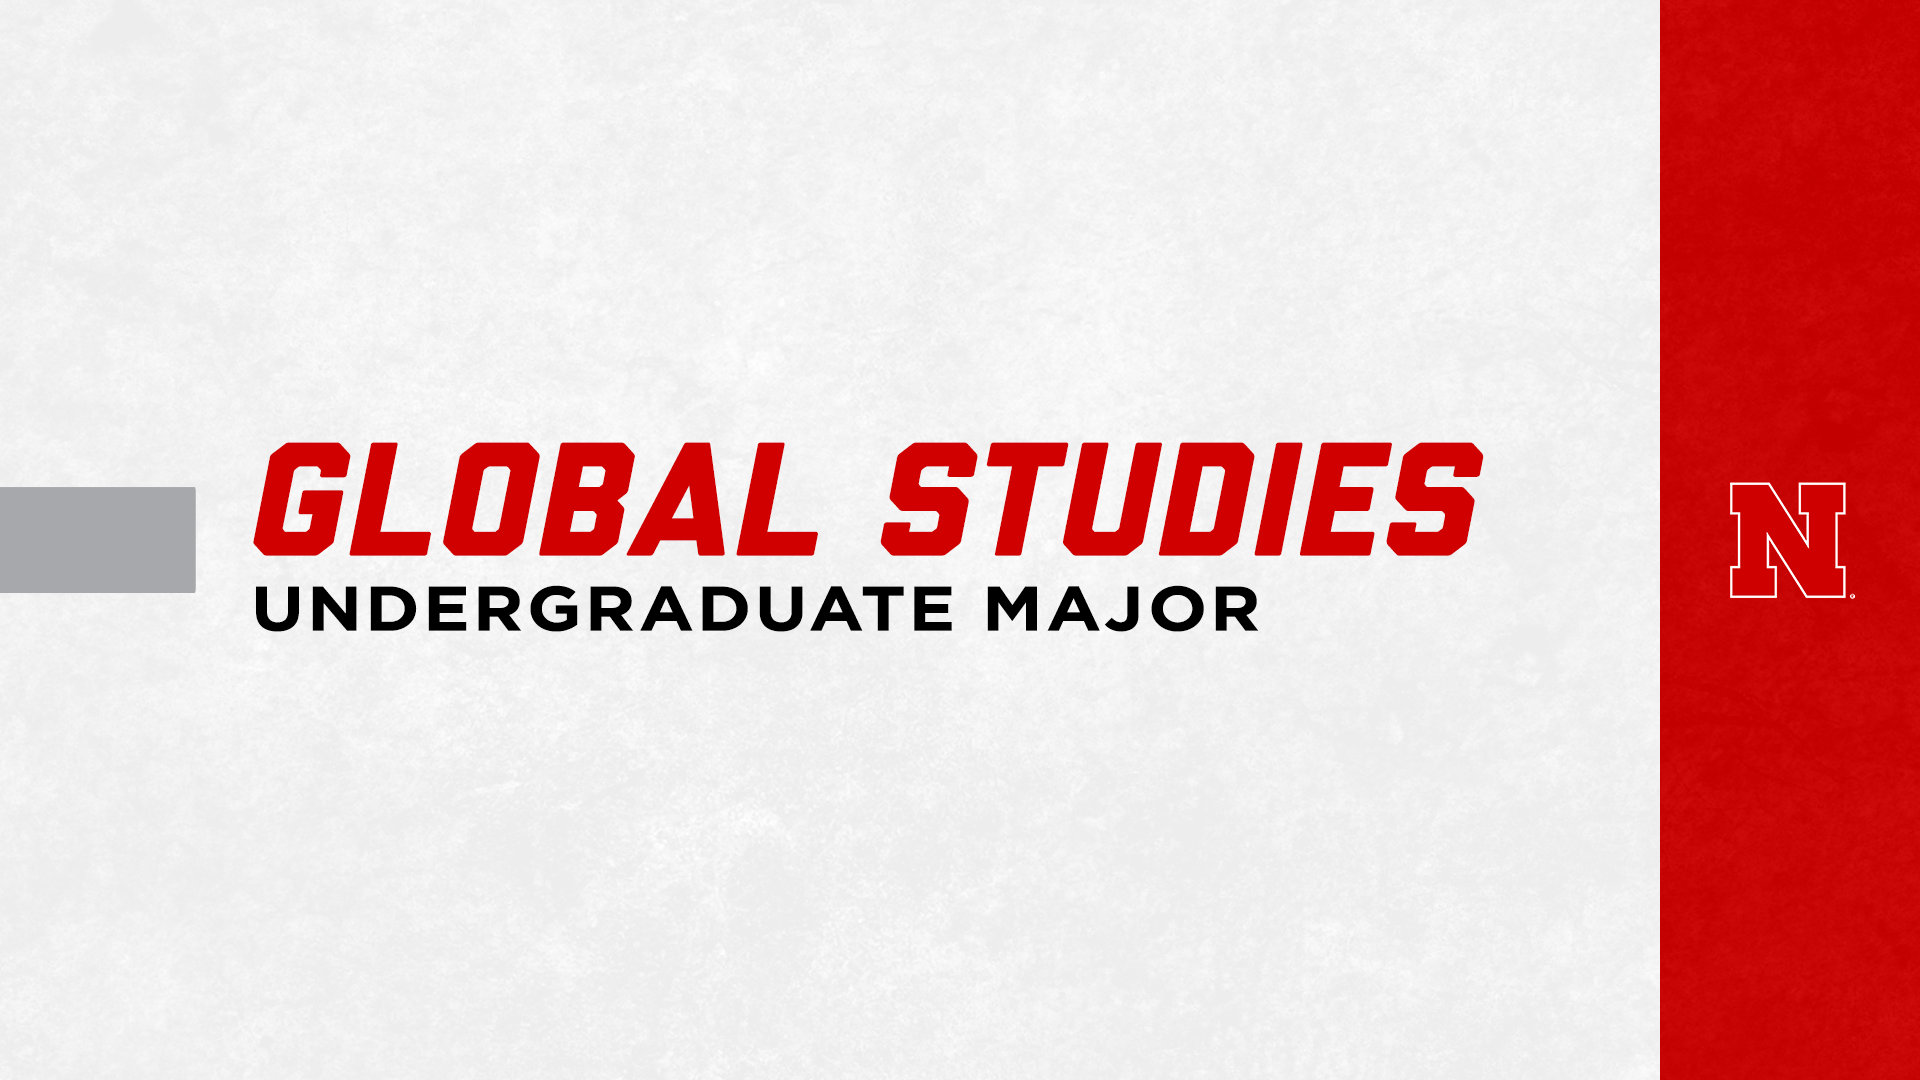 Global studies undergraduate major